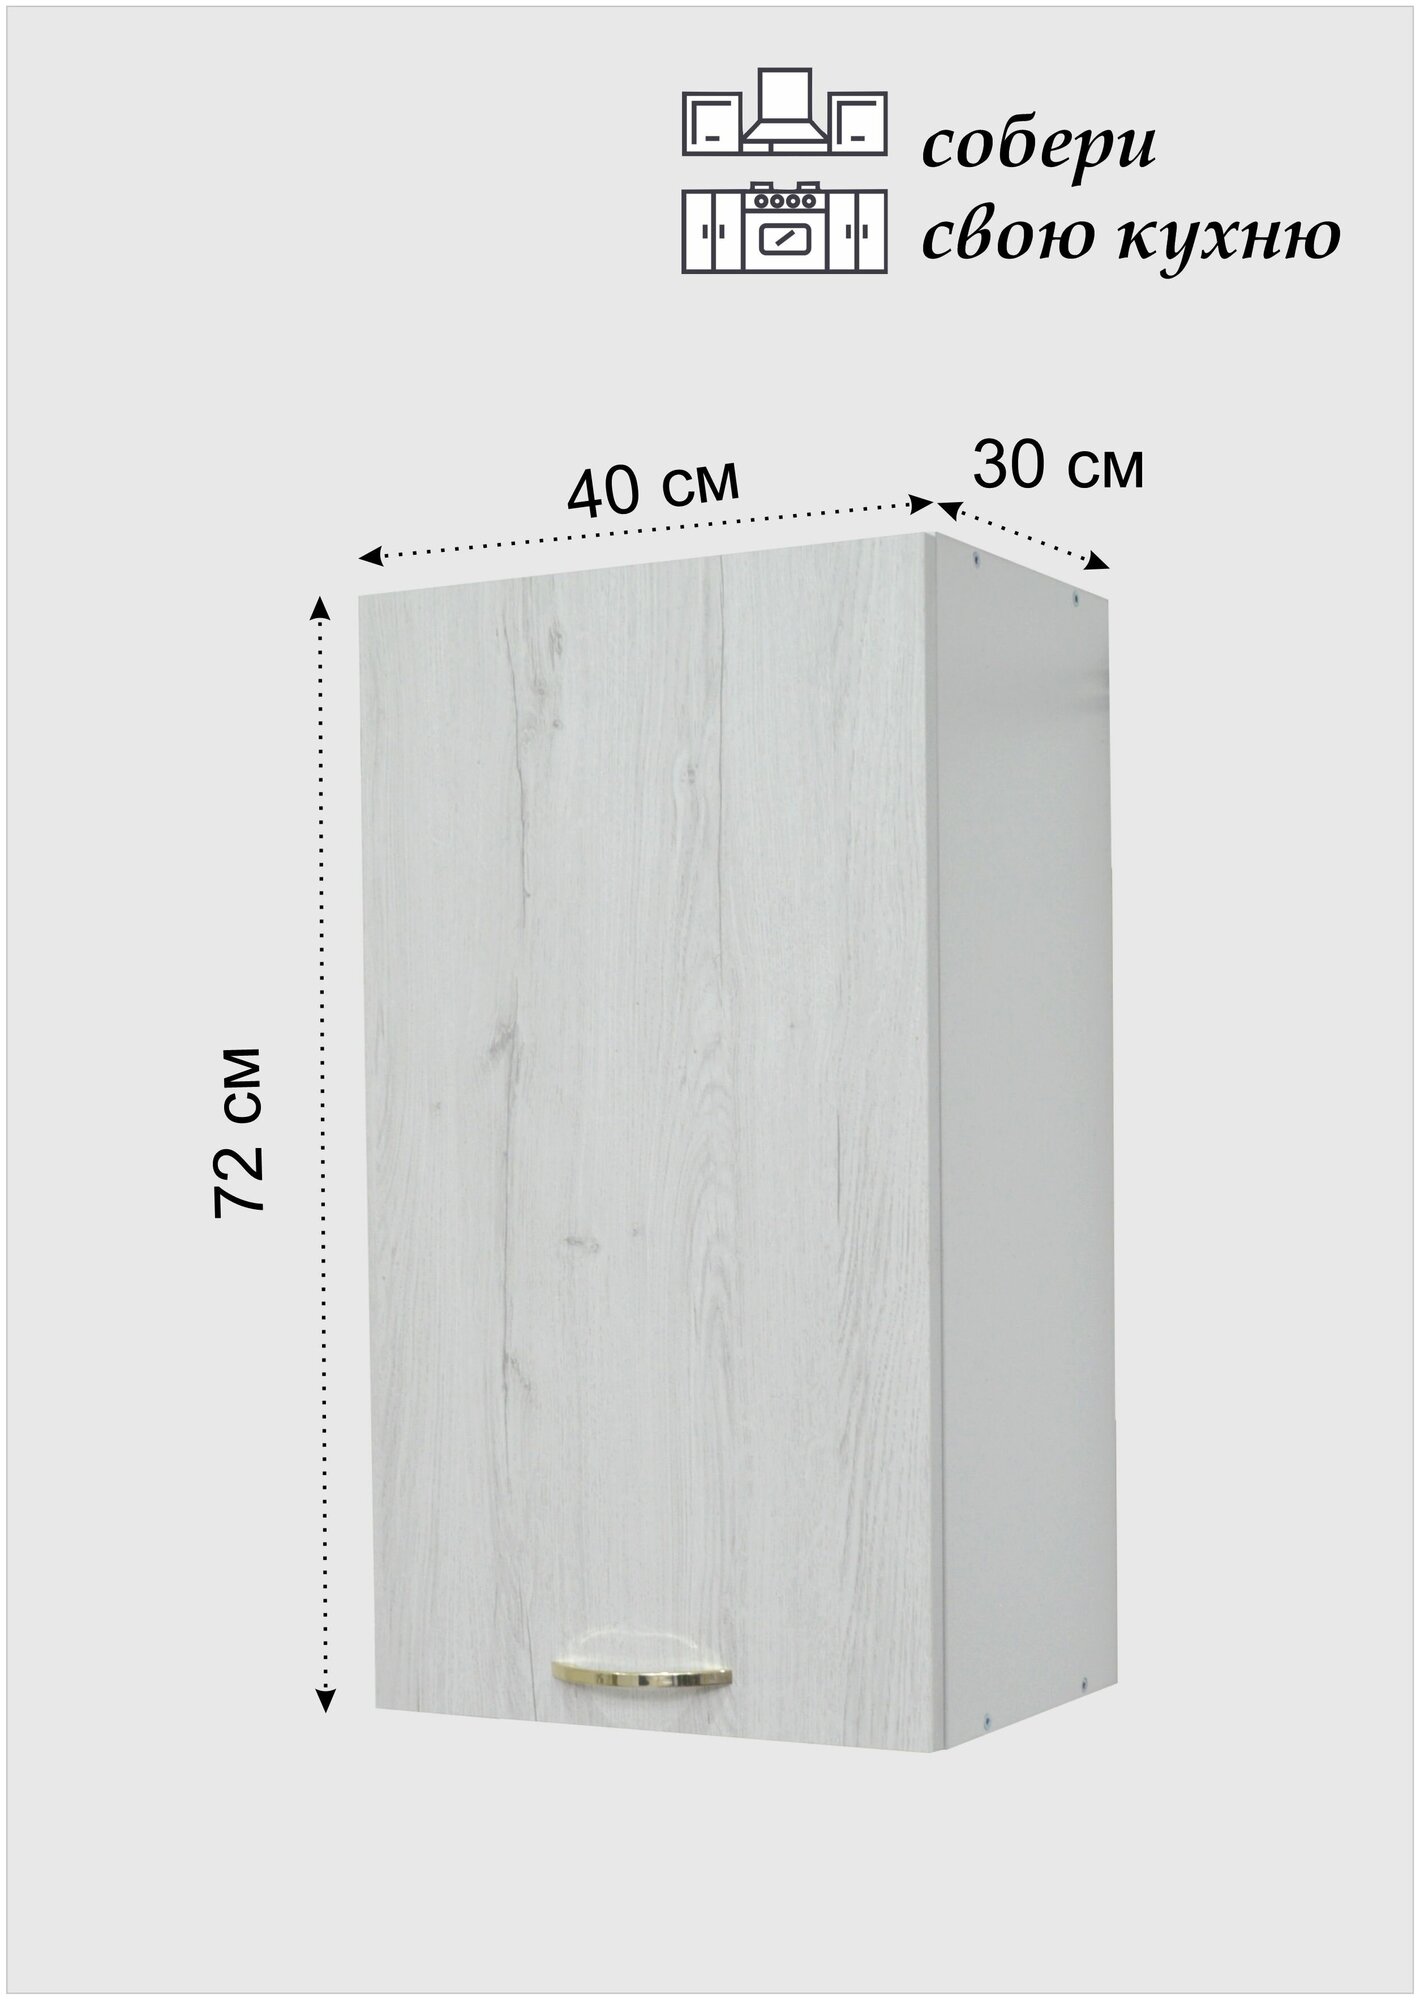 EVITAmeb/ Модуль кухонный шкаф 40 дуб эльза / шкаф навесной / шкаф кухонный / модуль кухонный